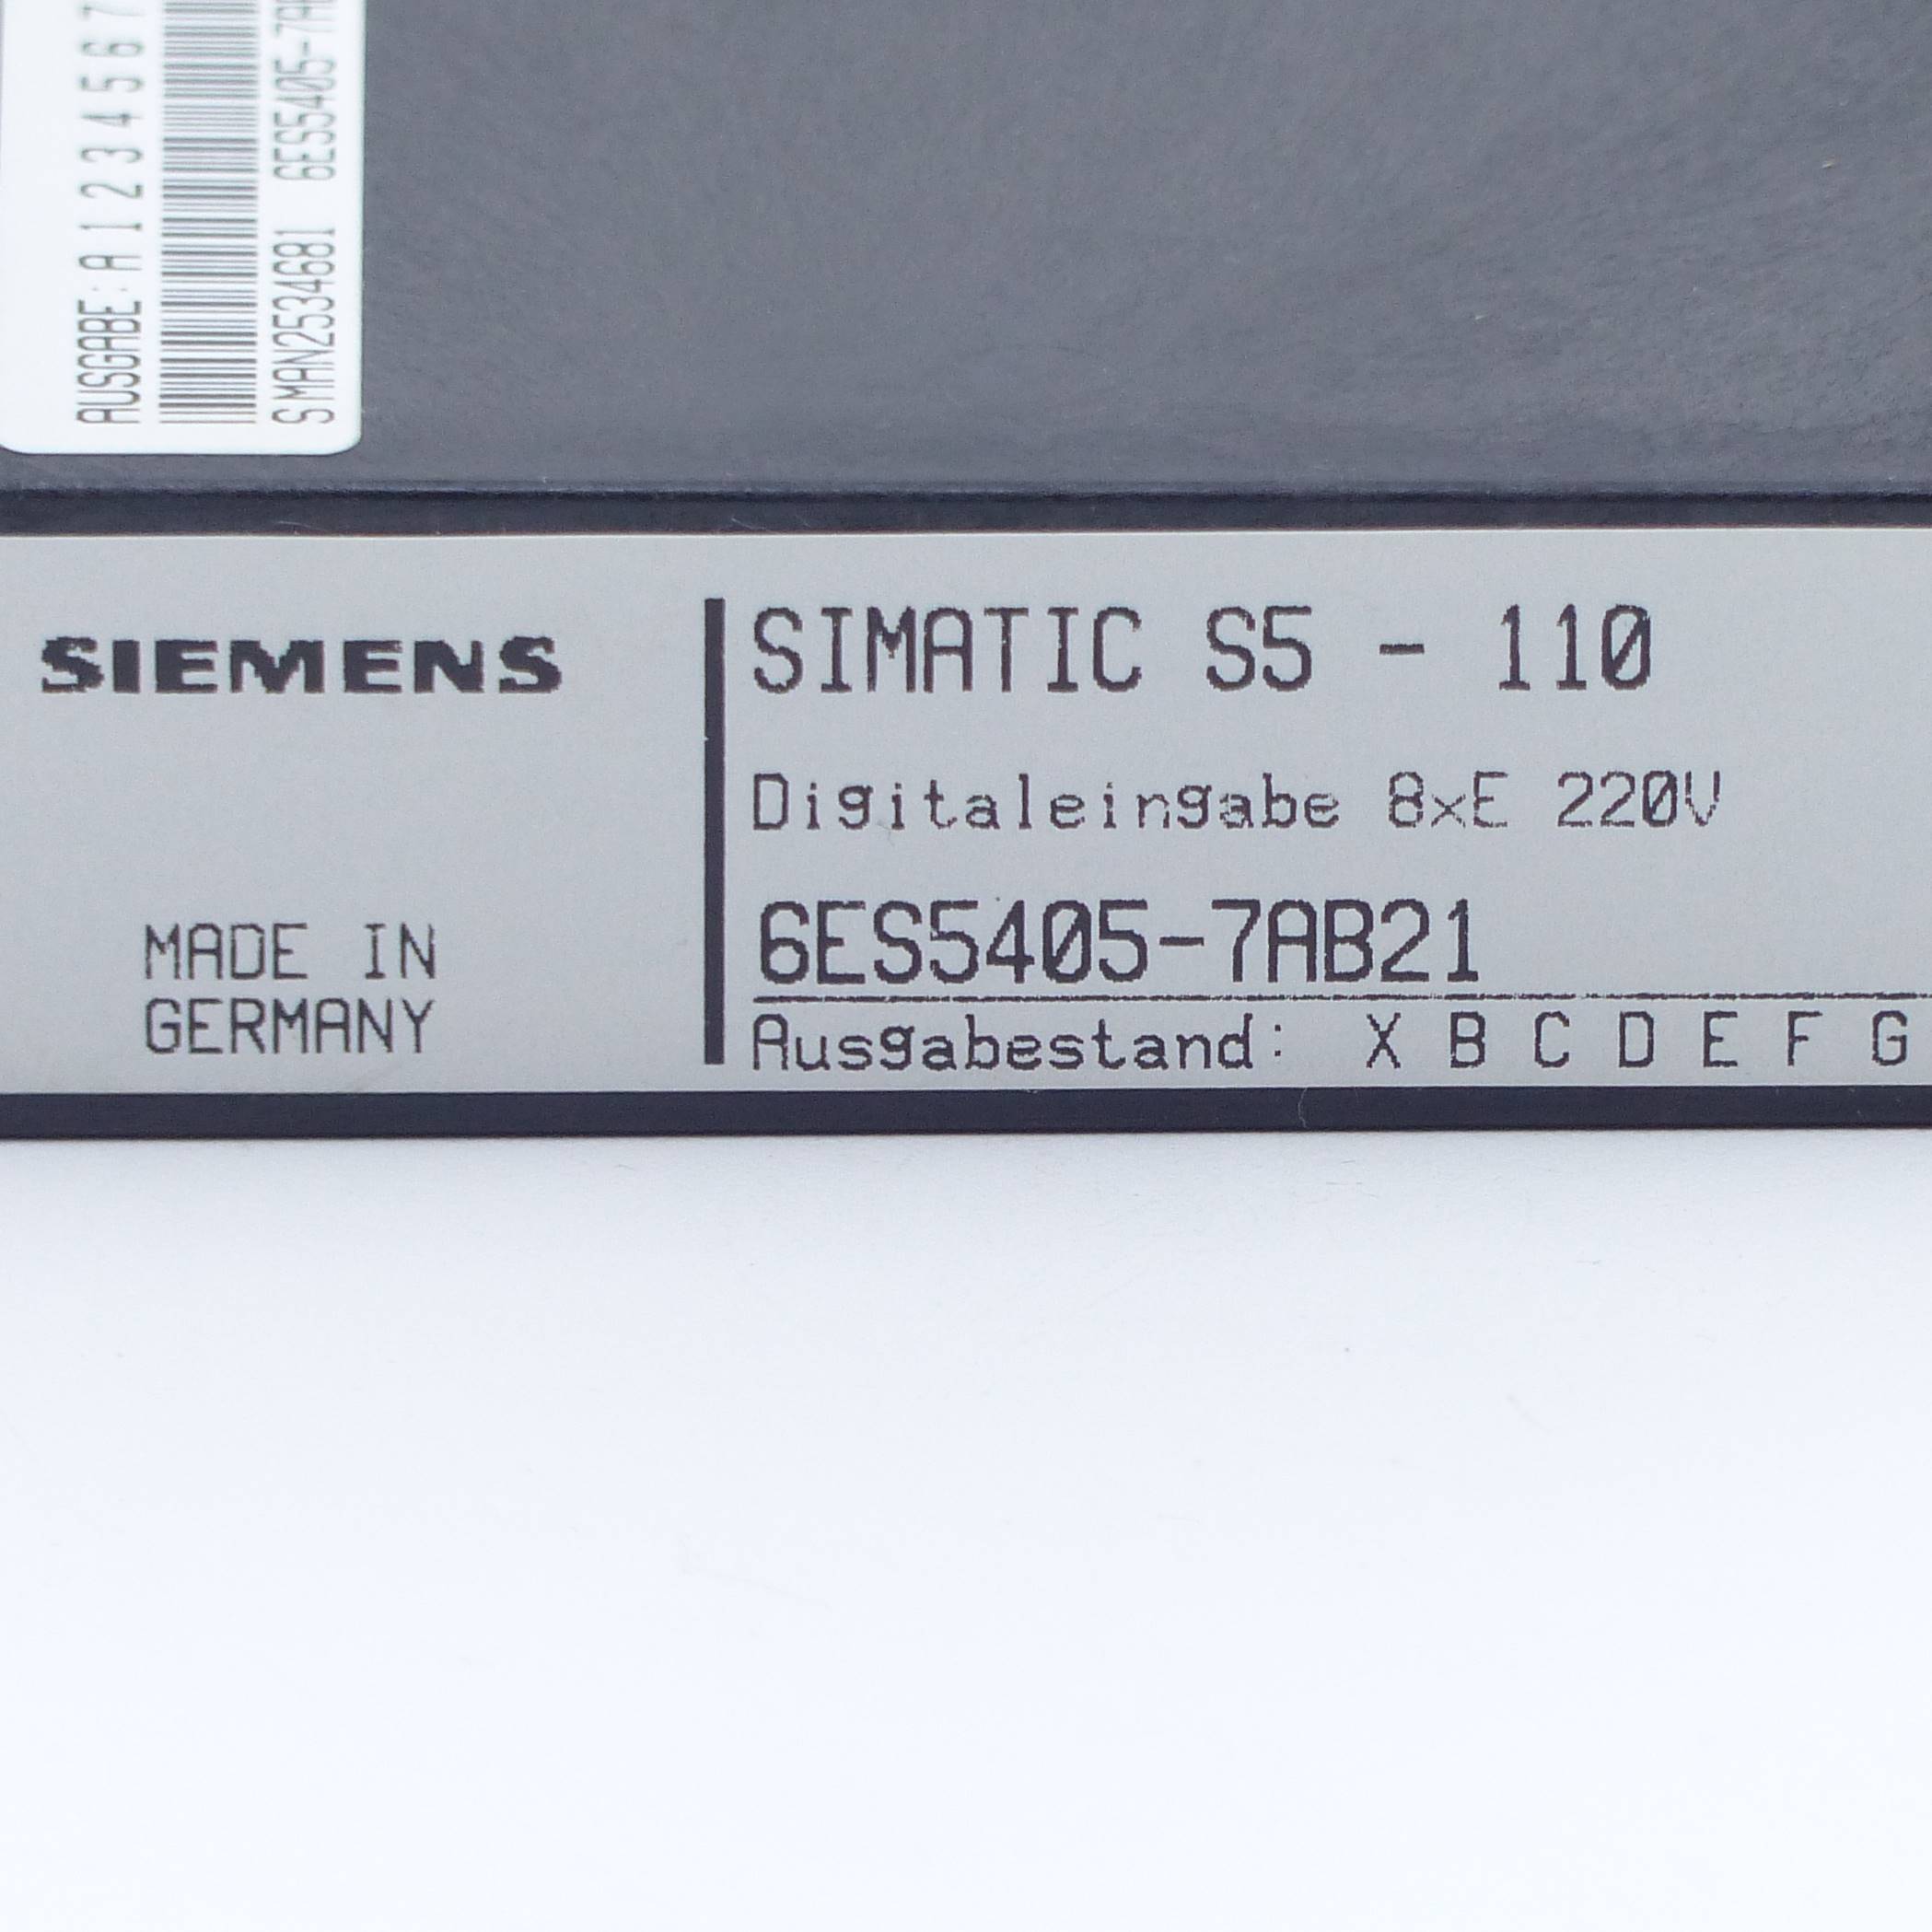 Digitaleingabe Simatic S5 - 110 